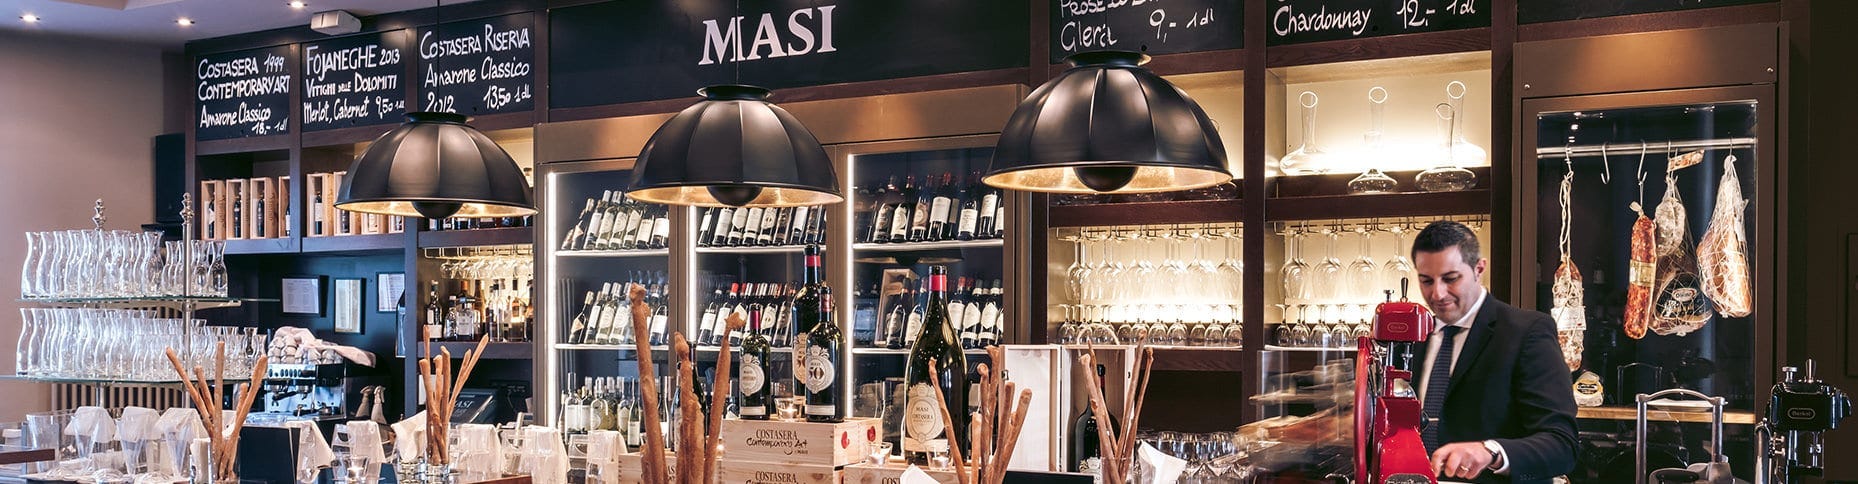 Masi Wine Bar & Restaurant